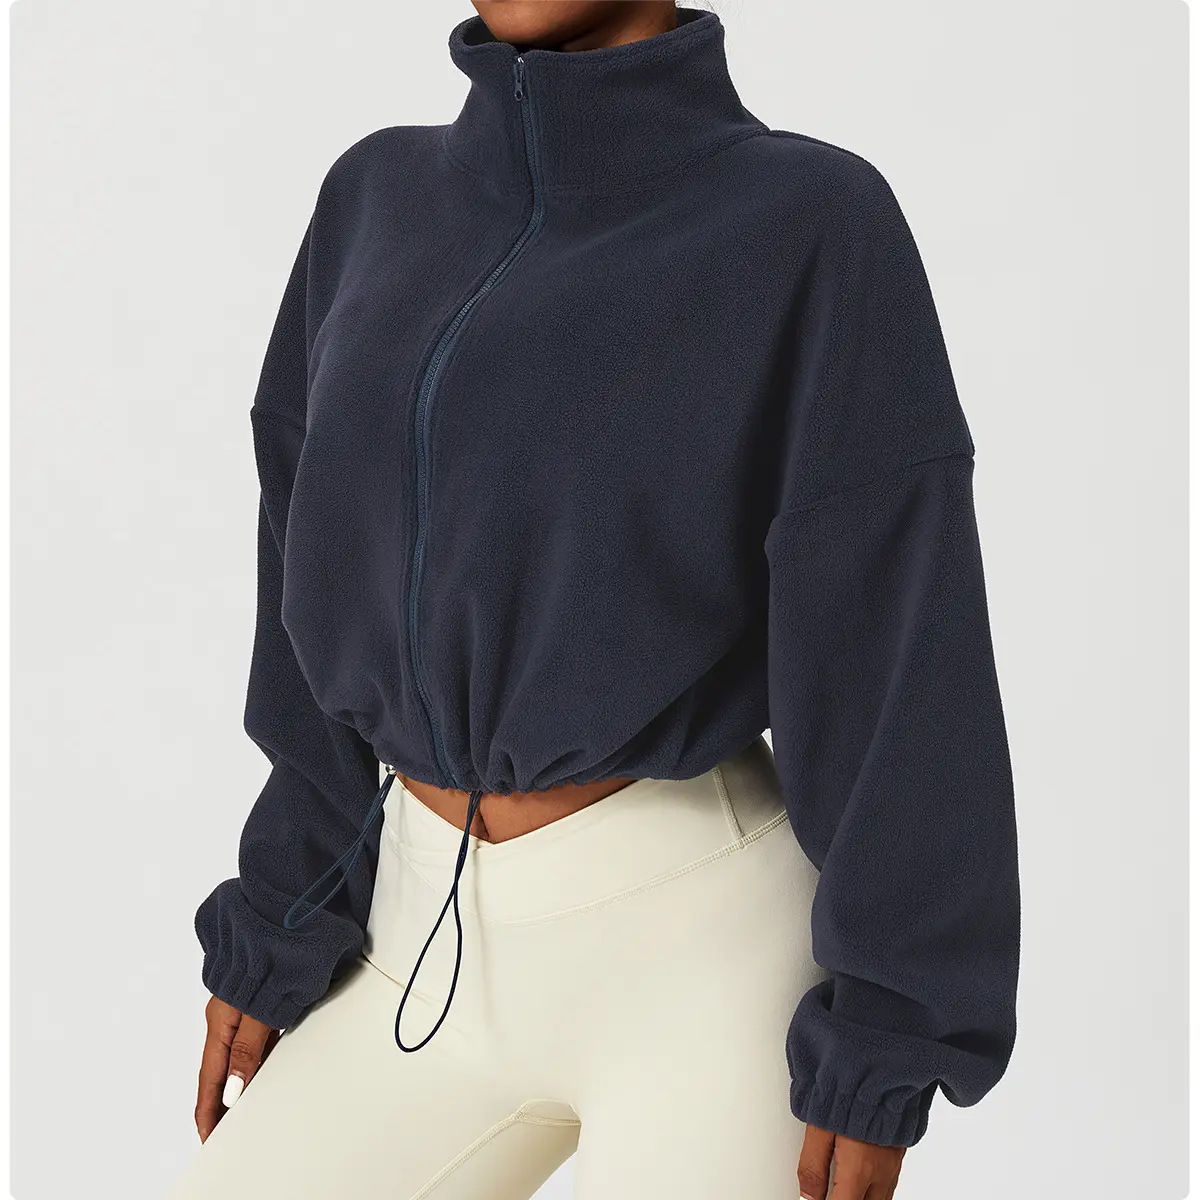 Outdoor Lamb's Fleece Sports Jacket Women's Autumn Stand-up Collar Loose Plus Warm Origami Fabric Top